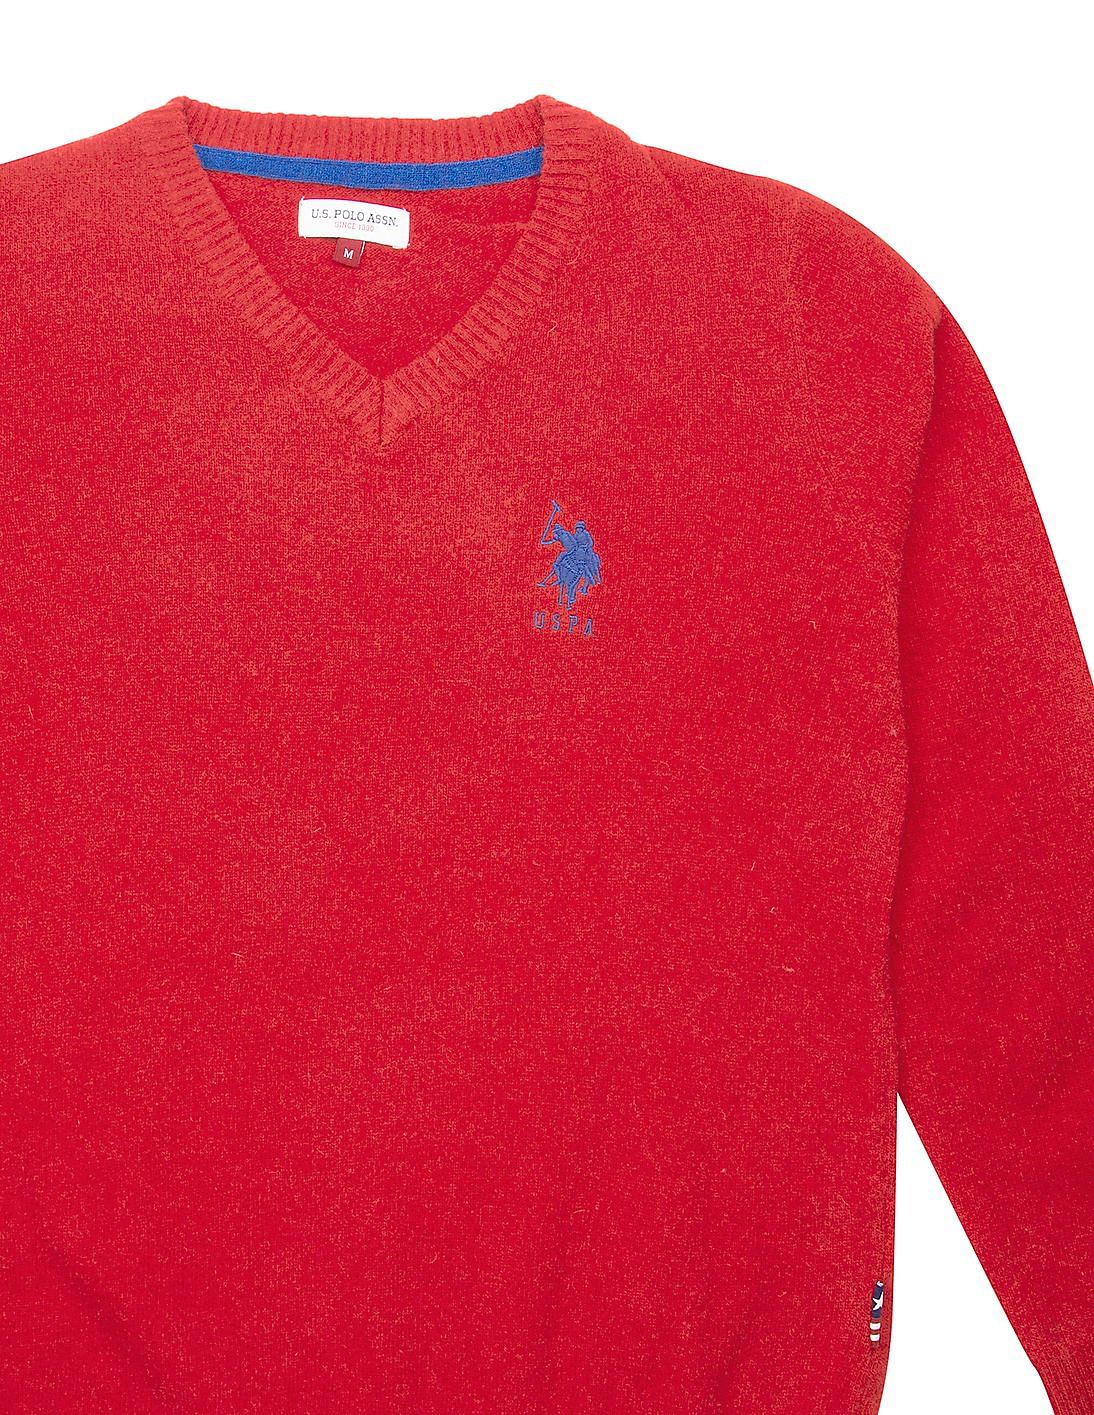 Polo Assn Boys Birdseye Knit Cardigan Sweater U.S 